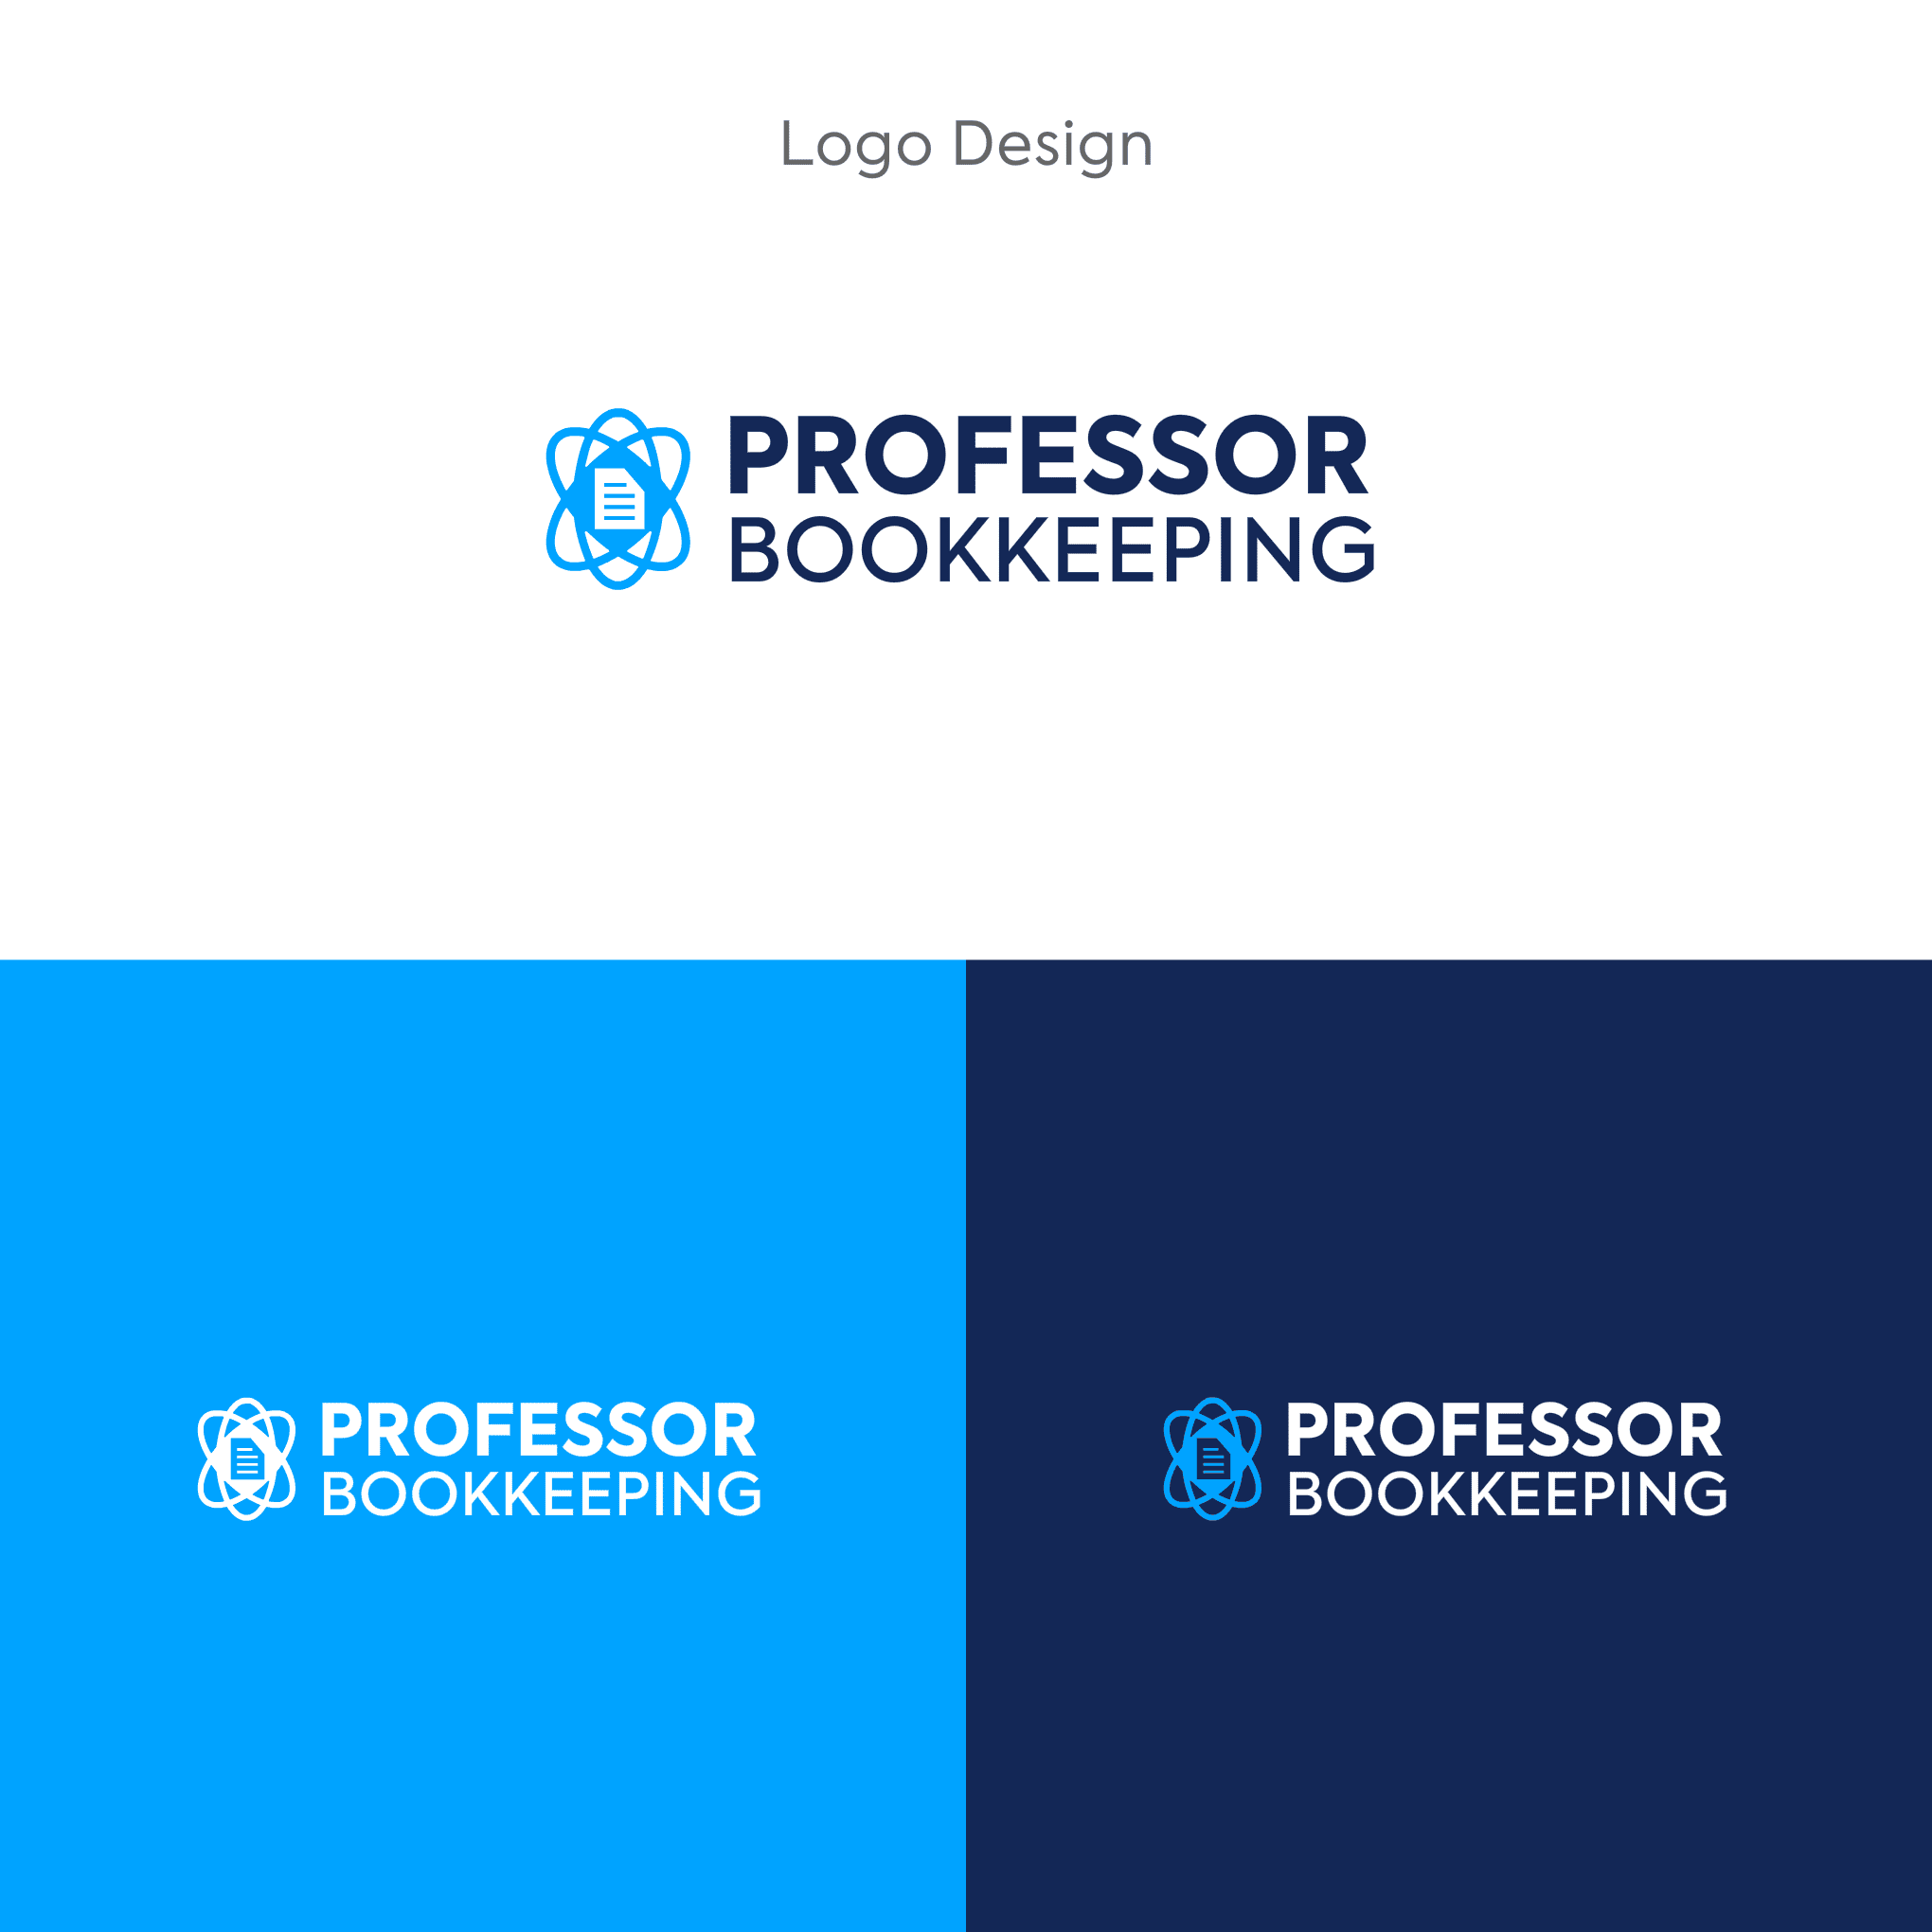 01 - Logo Design (4)